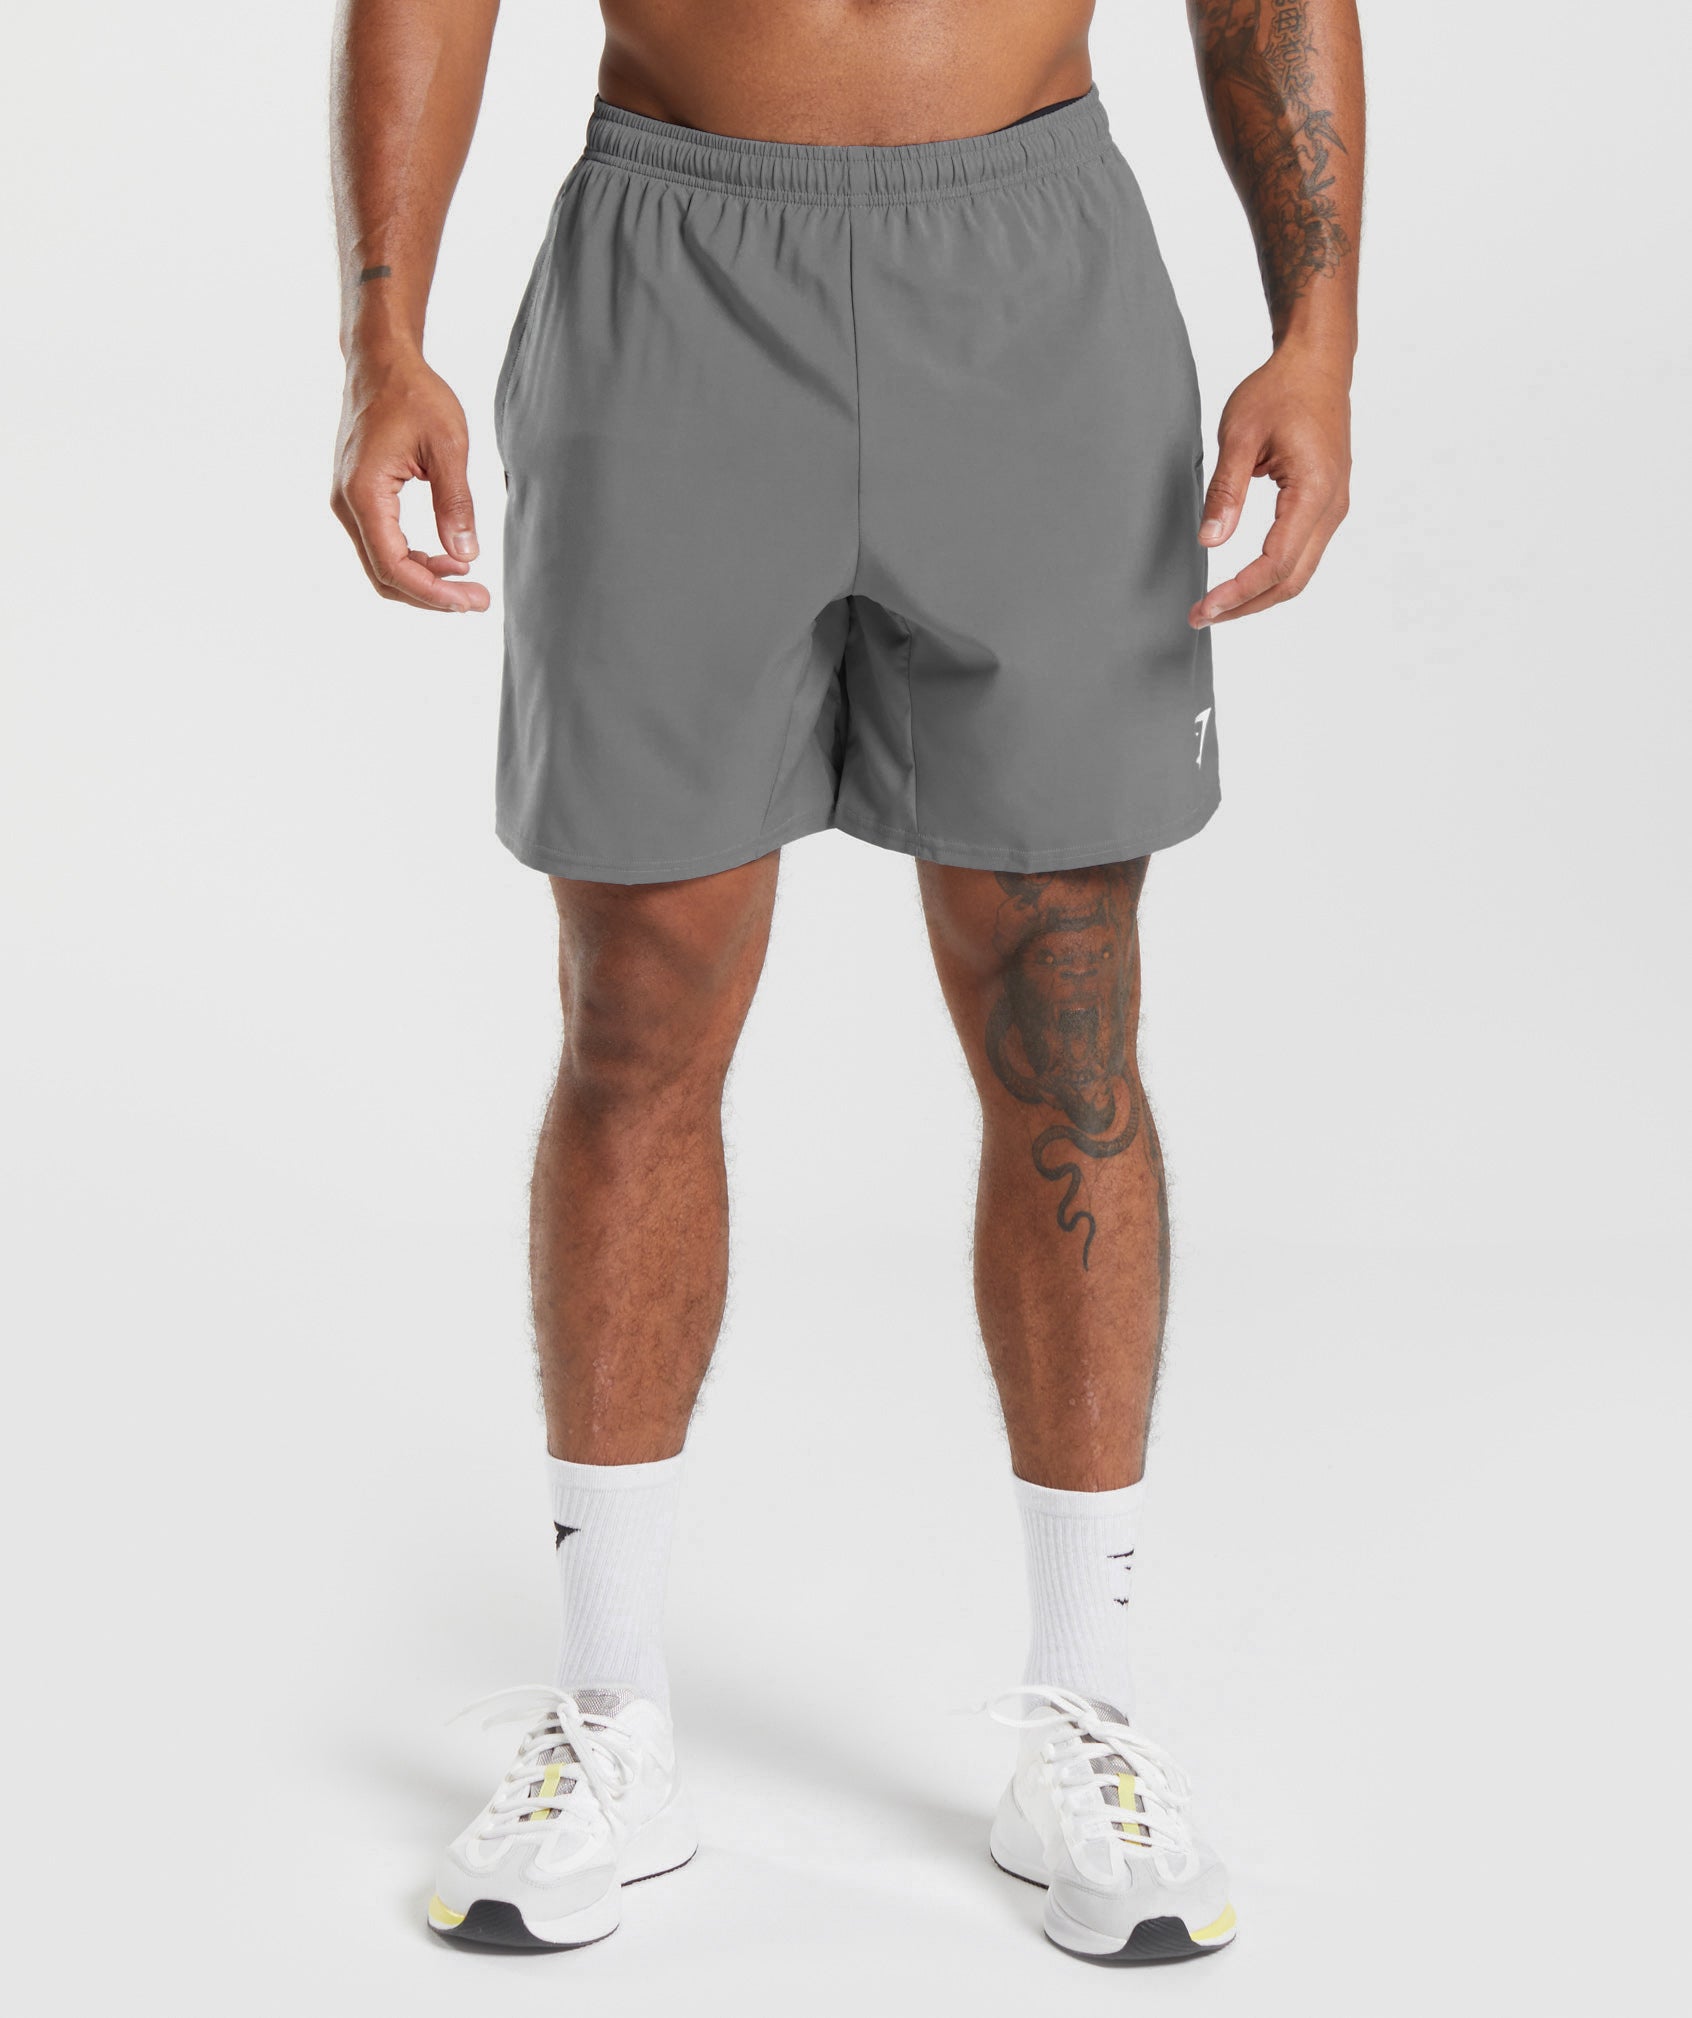 Gymshark Training Shorts - Charcoal Grey